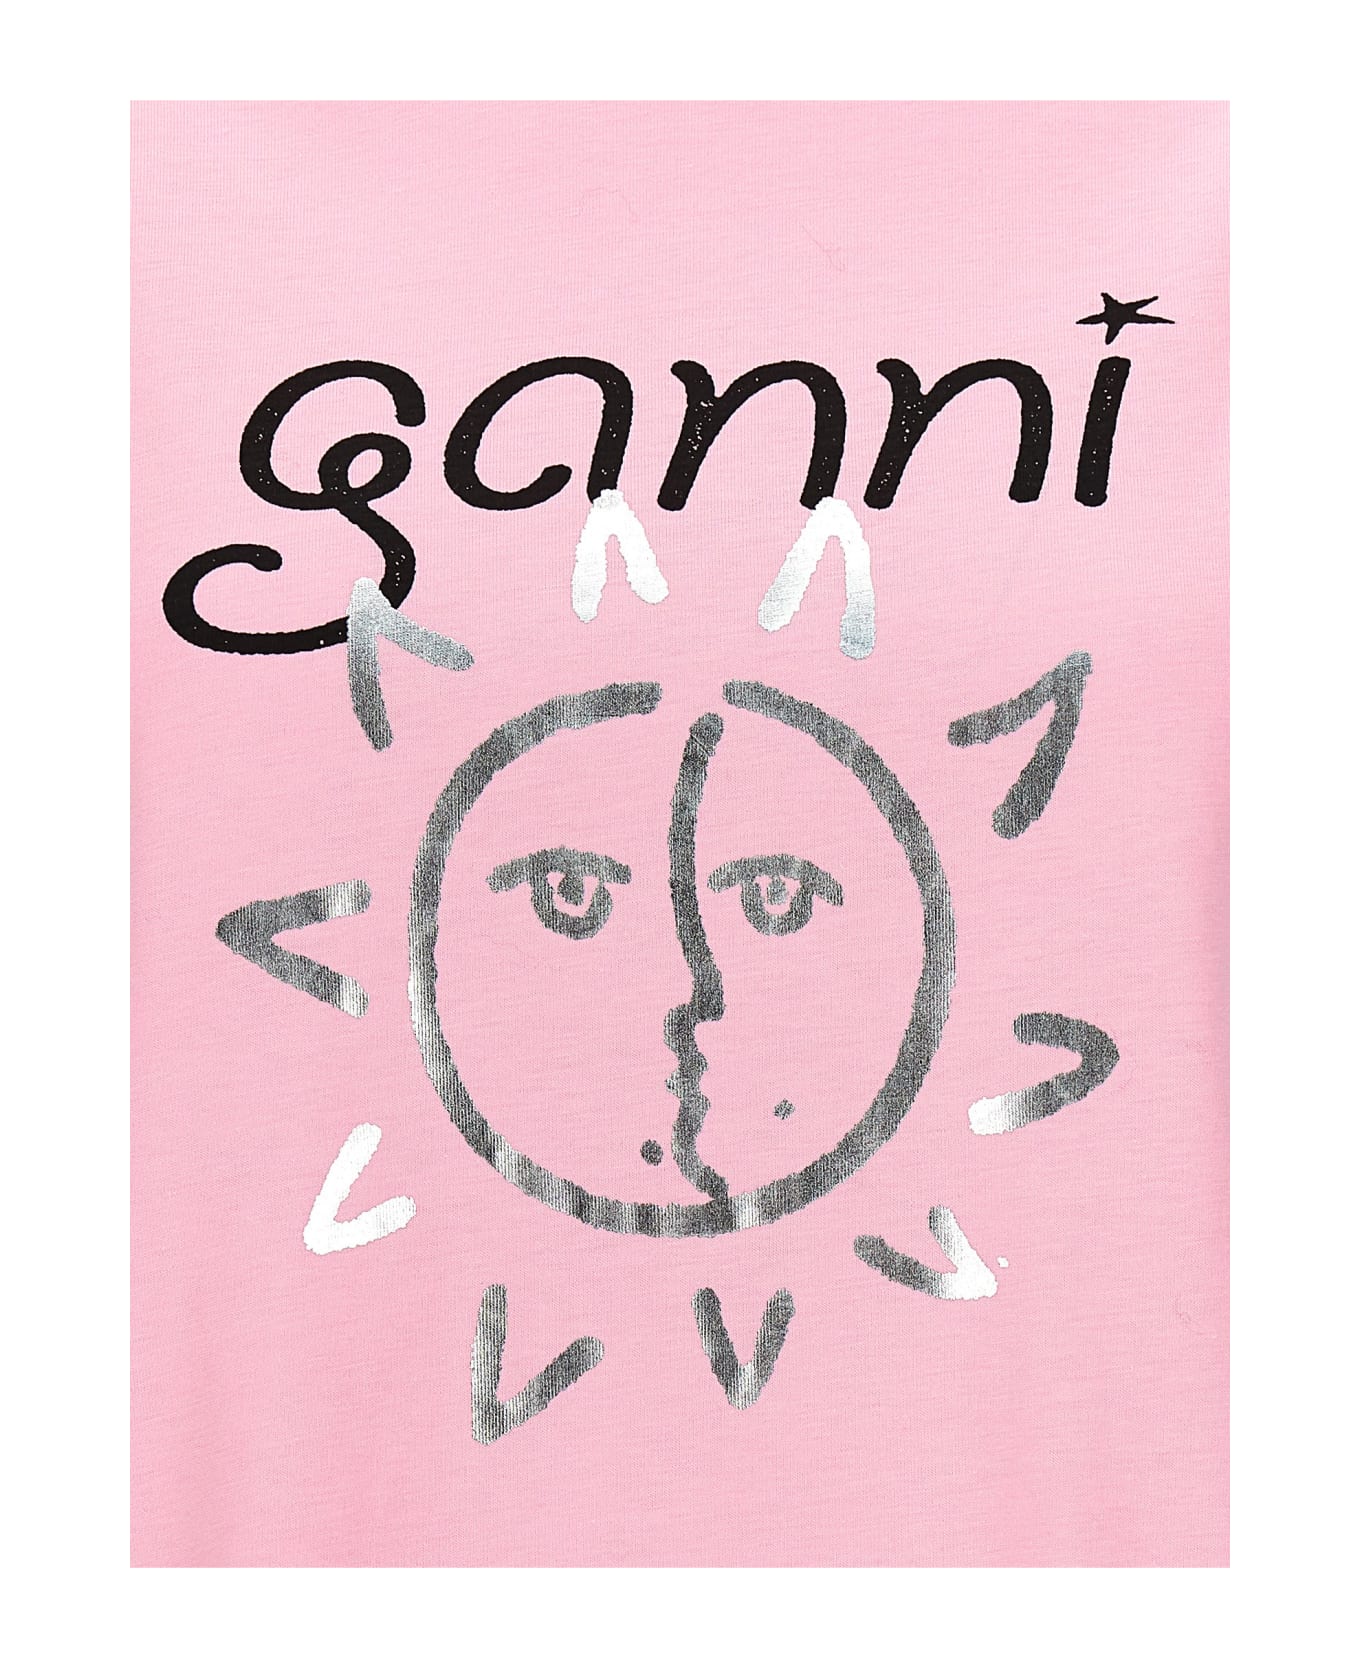 Ganni Logo Print T-shirt - Pink